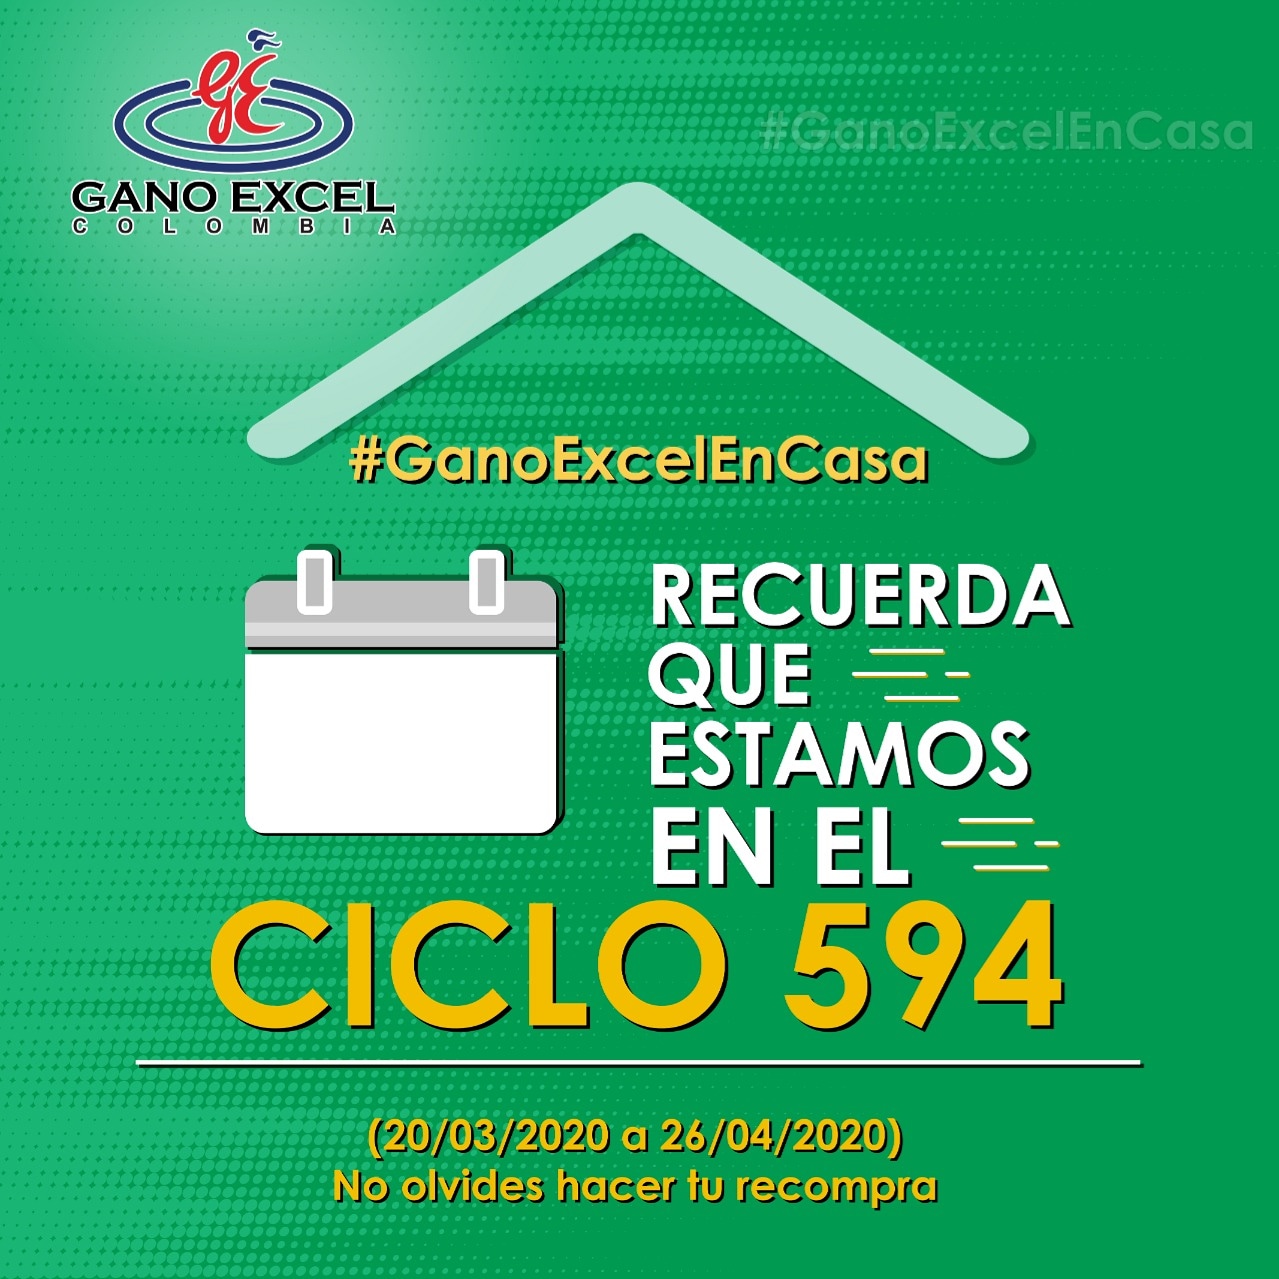 Gano Excel Colombia (@GanoExcel_Col) / Twitter